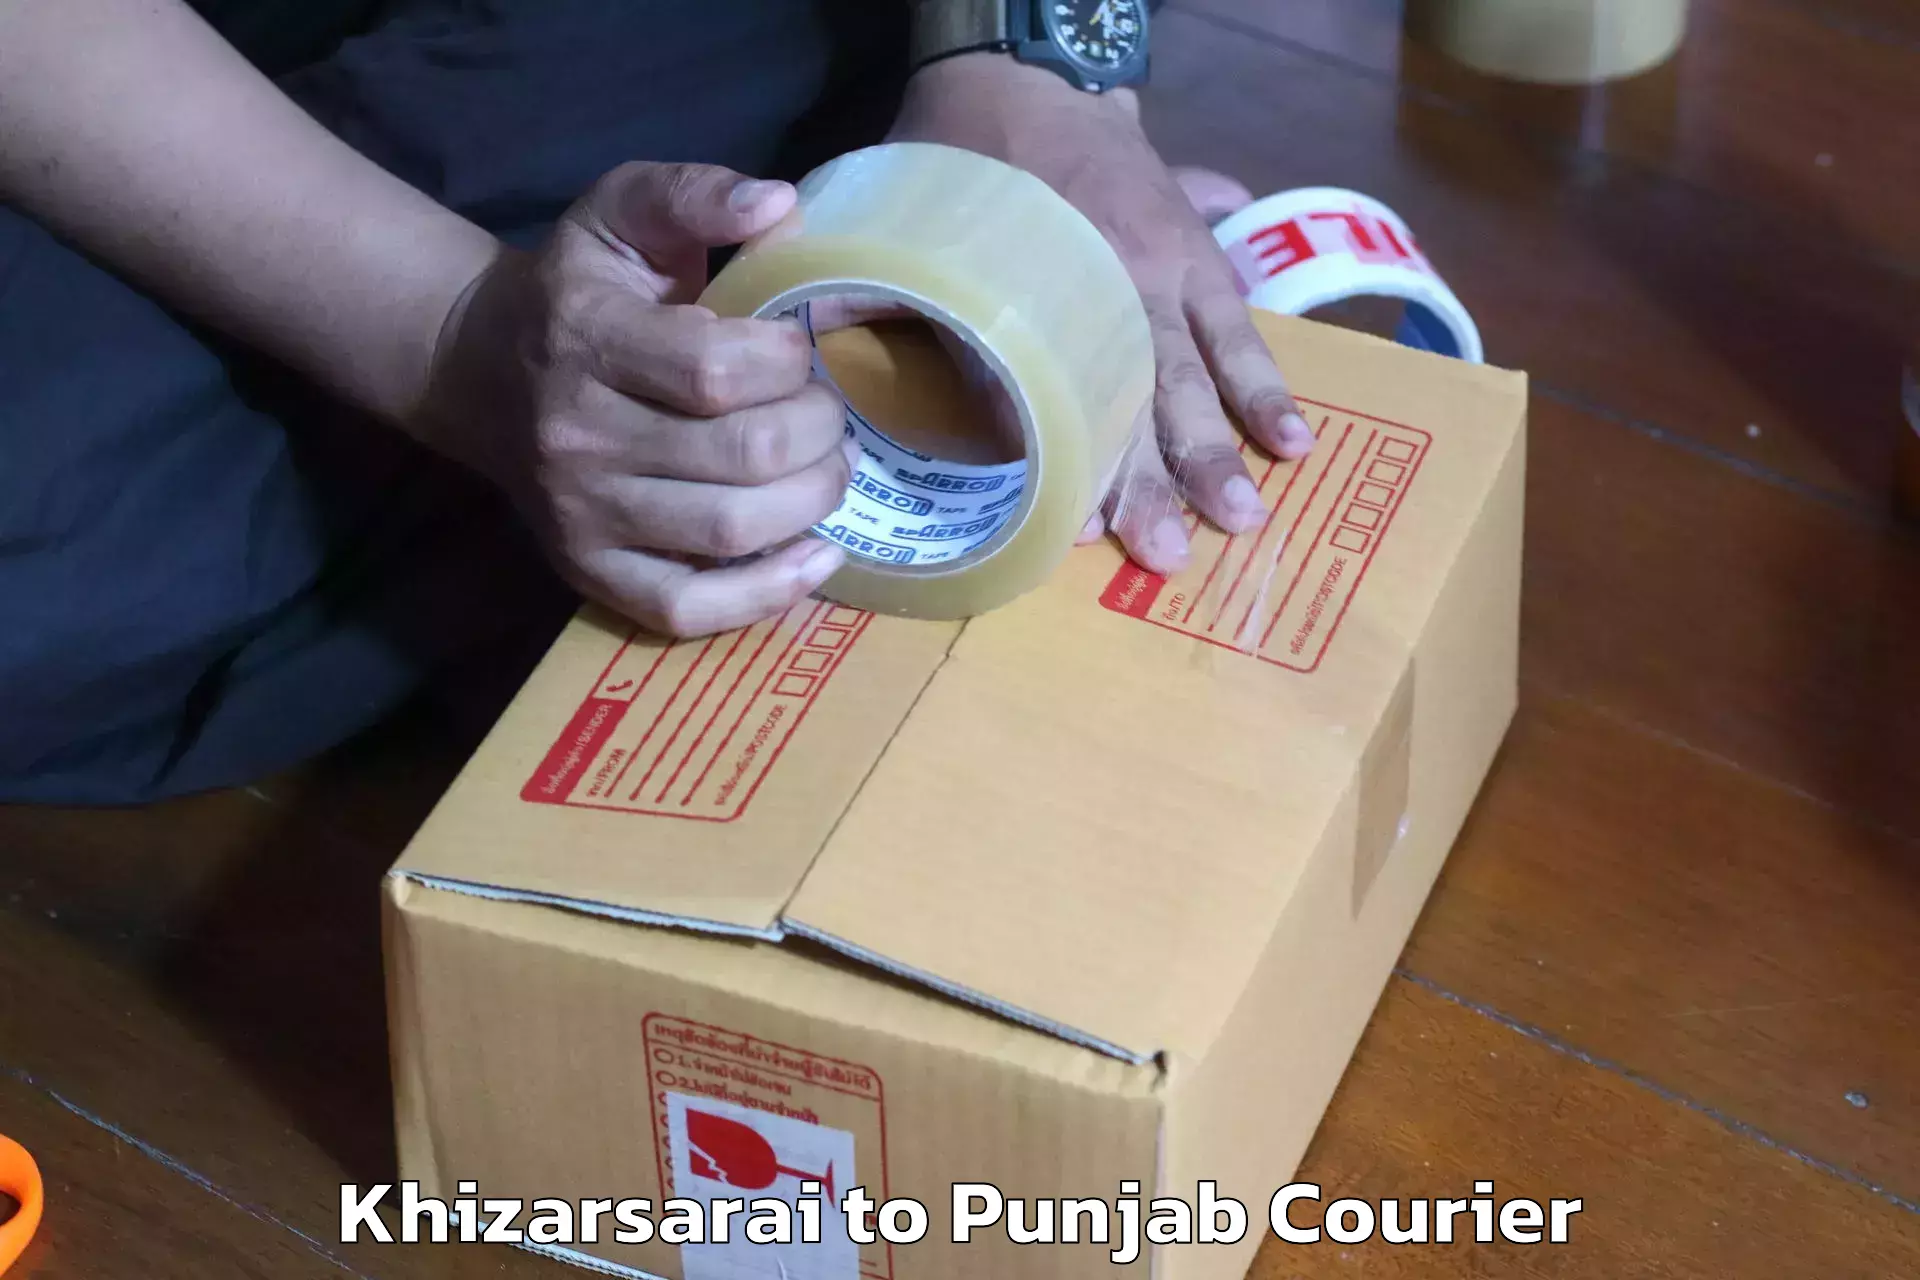 Professional movers and packers Khizarsarai to Fatehgarh Sahib